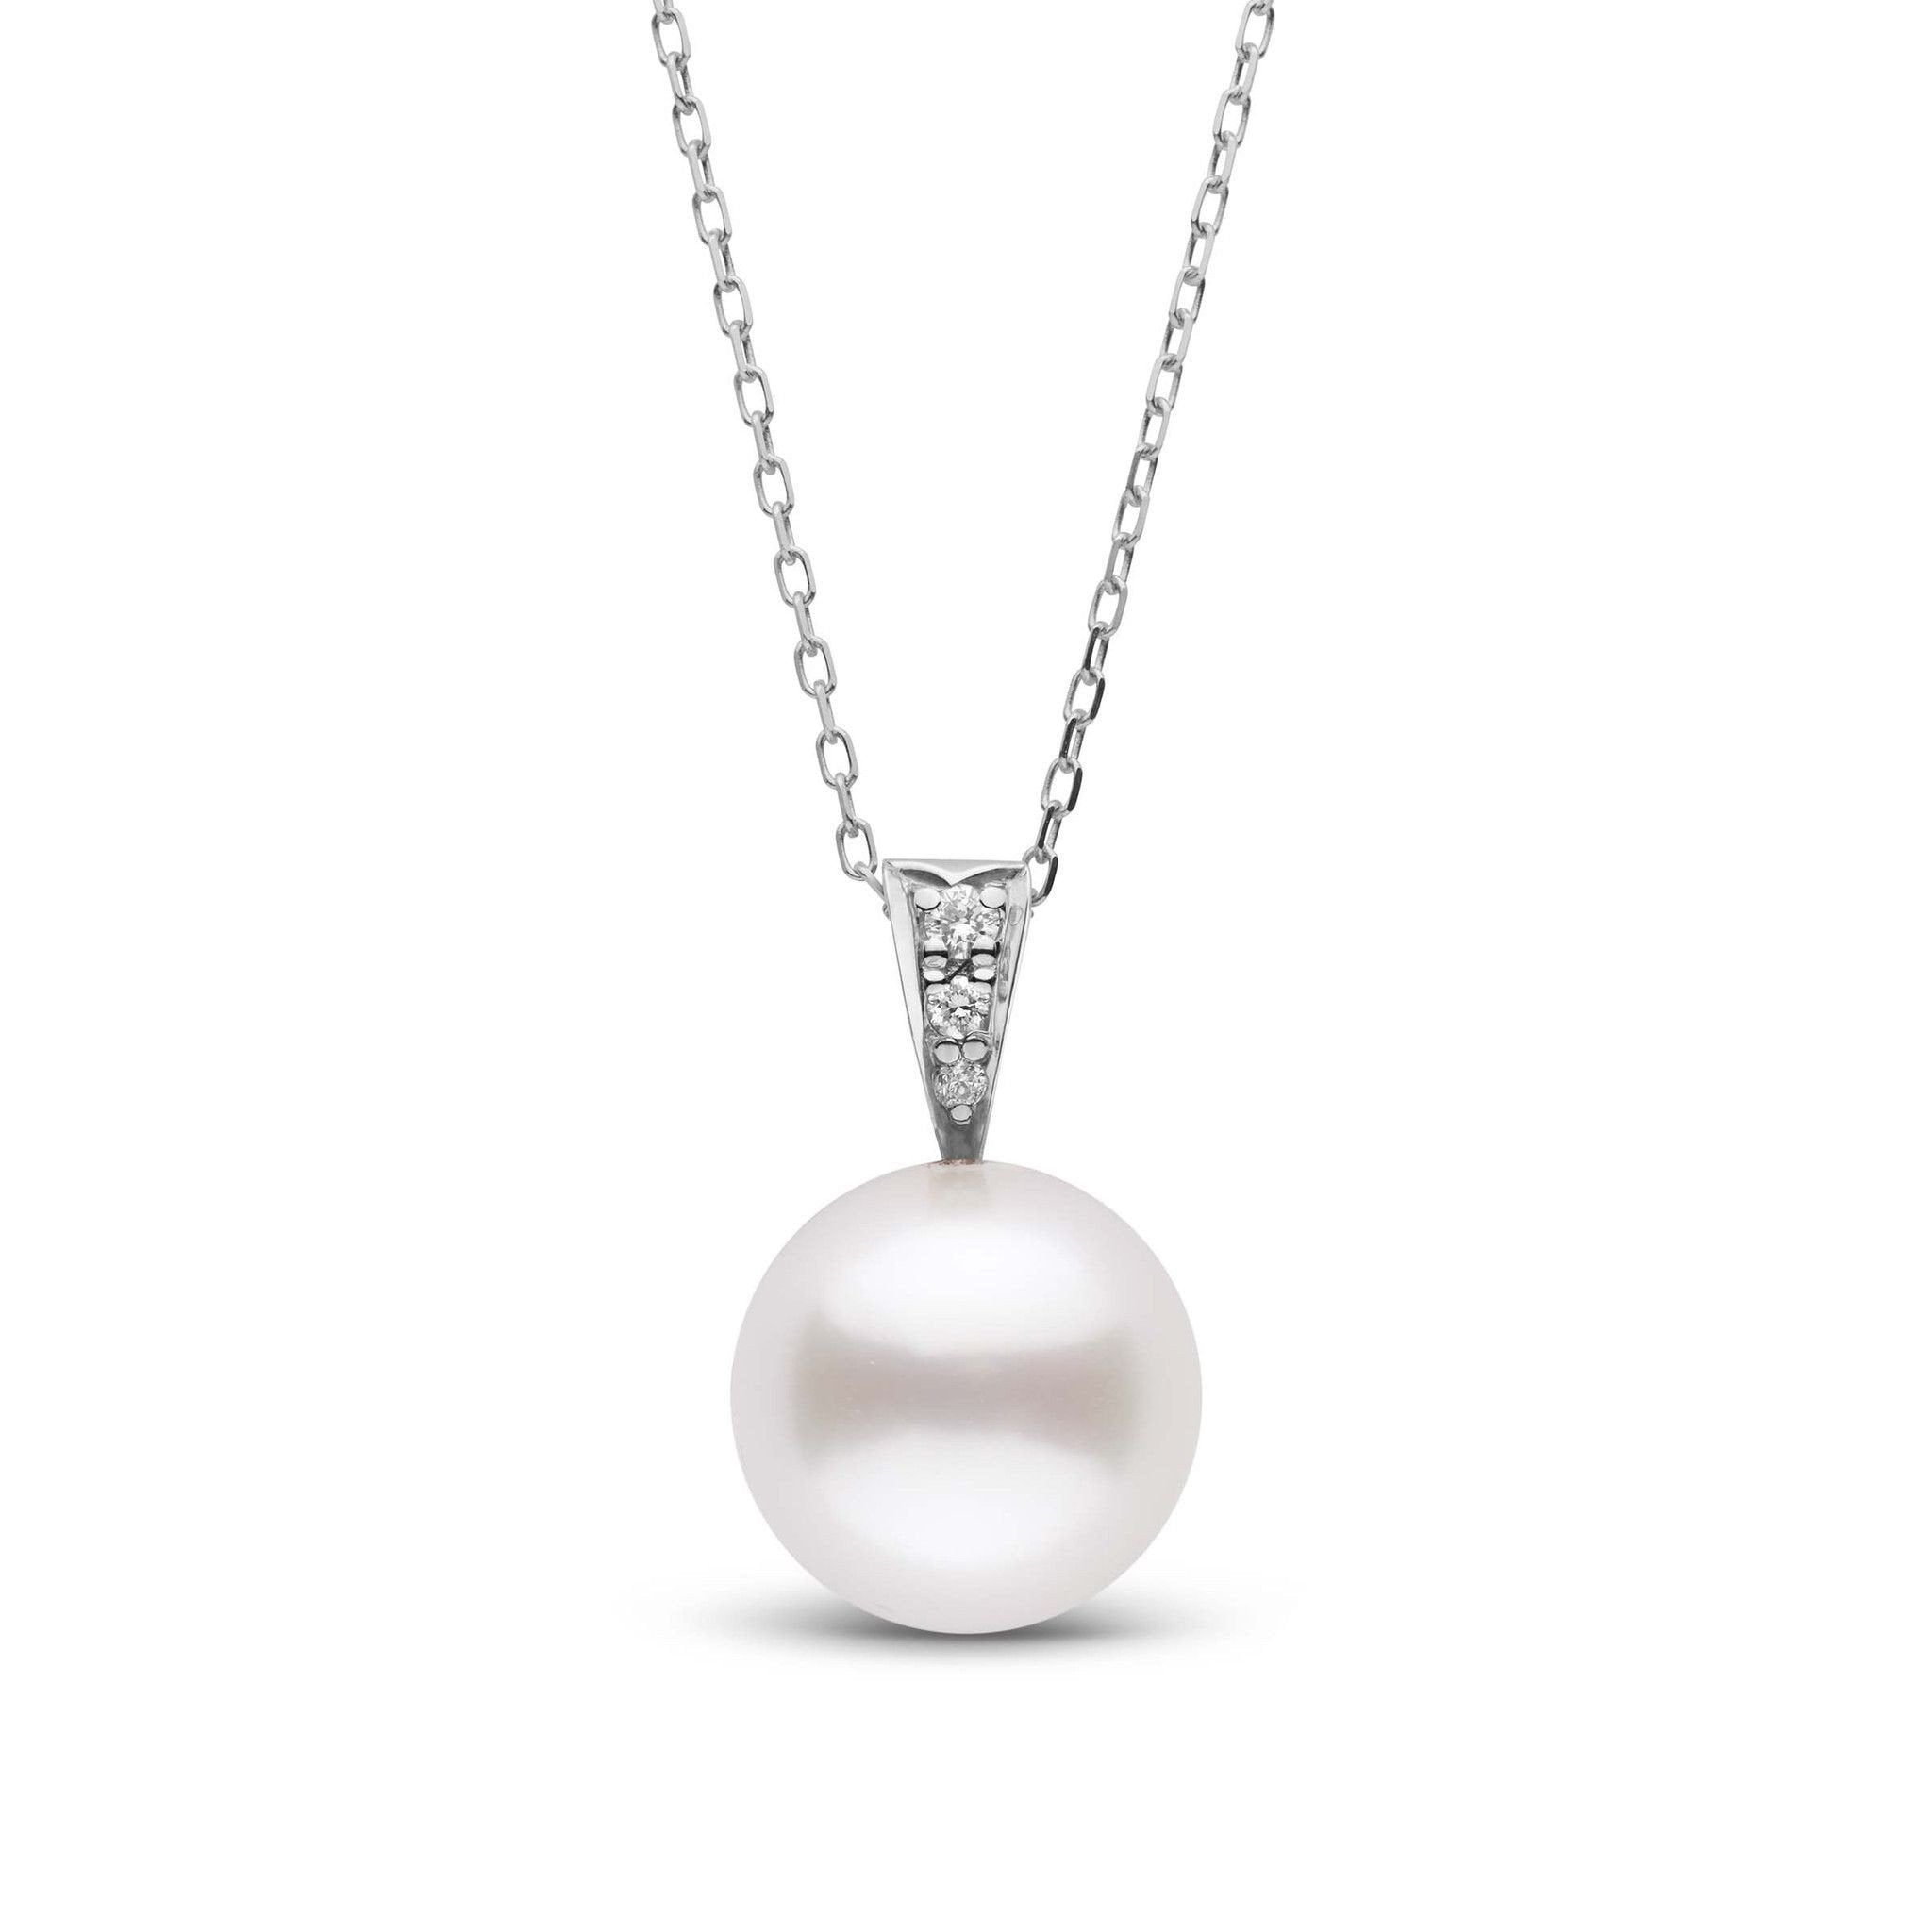 Desire Collection White 10.0-11.0 mm South Sea Pearl and Diamond Pendant